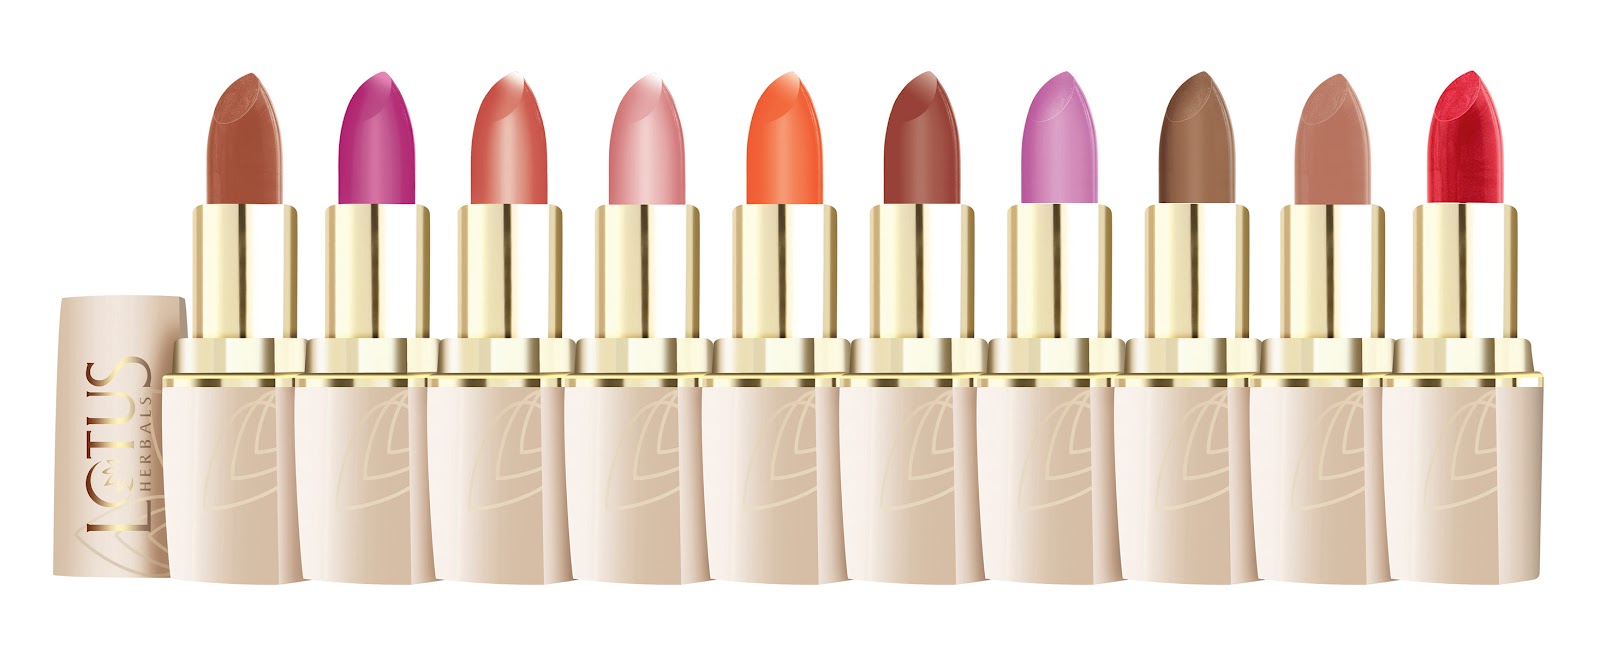 Top 10 Lipsticks Brand In India